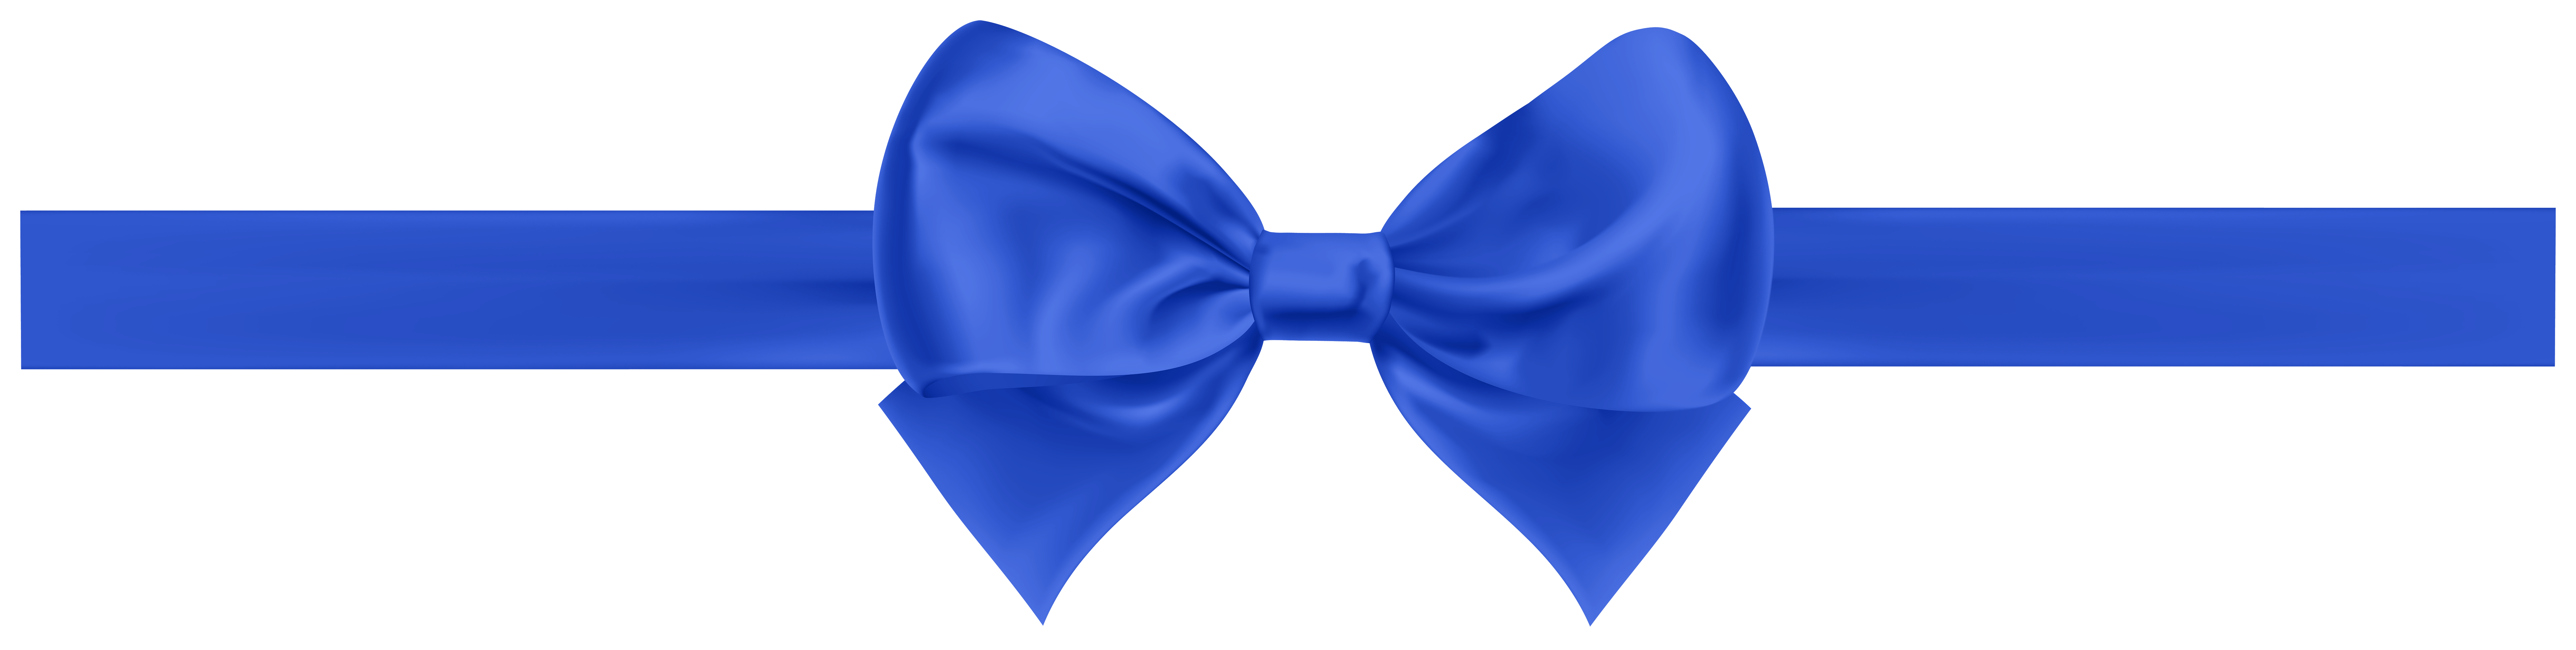 Ribbon - Dark Blue Ribbon Png - Free Transparent PNG Clipart Images Download